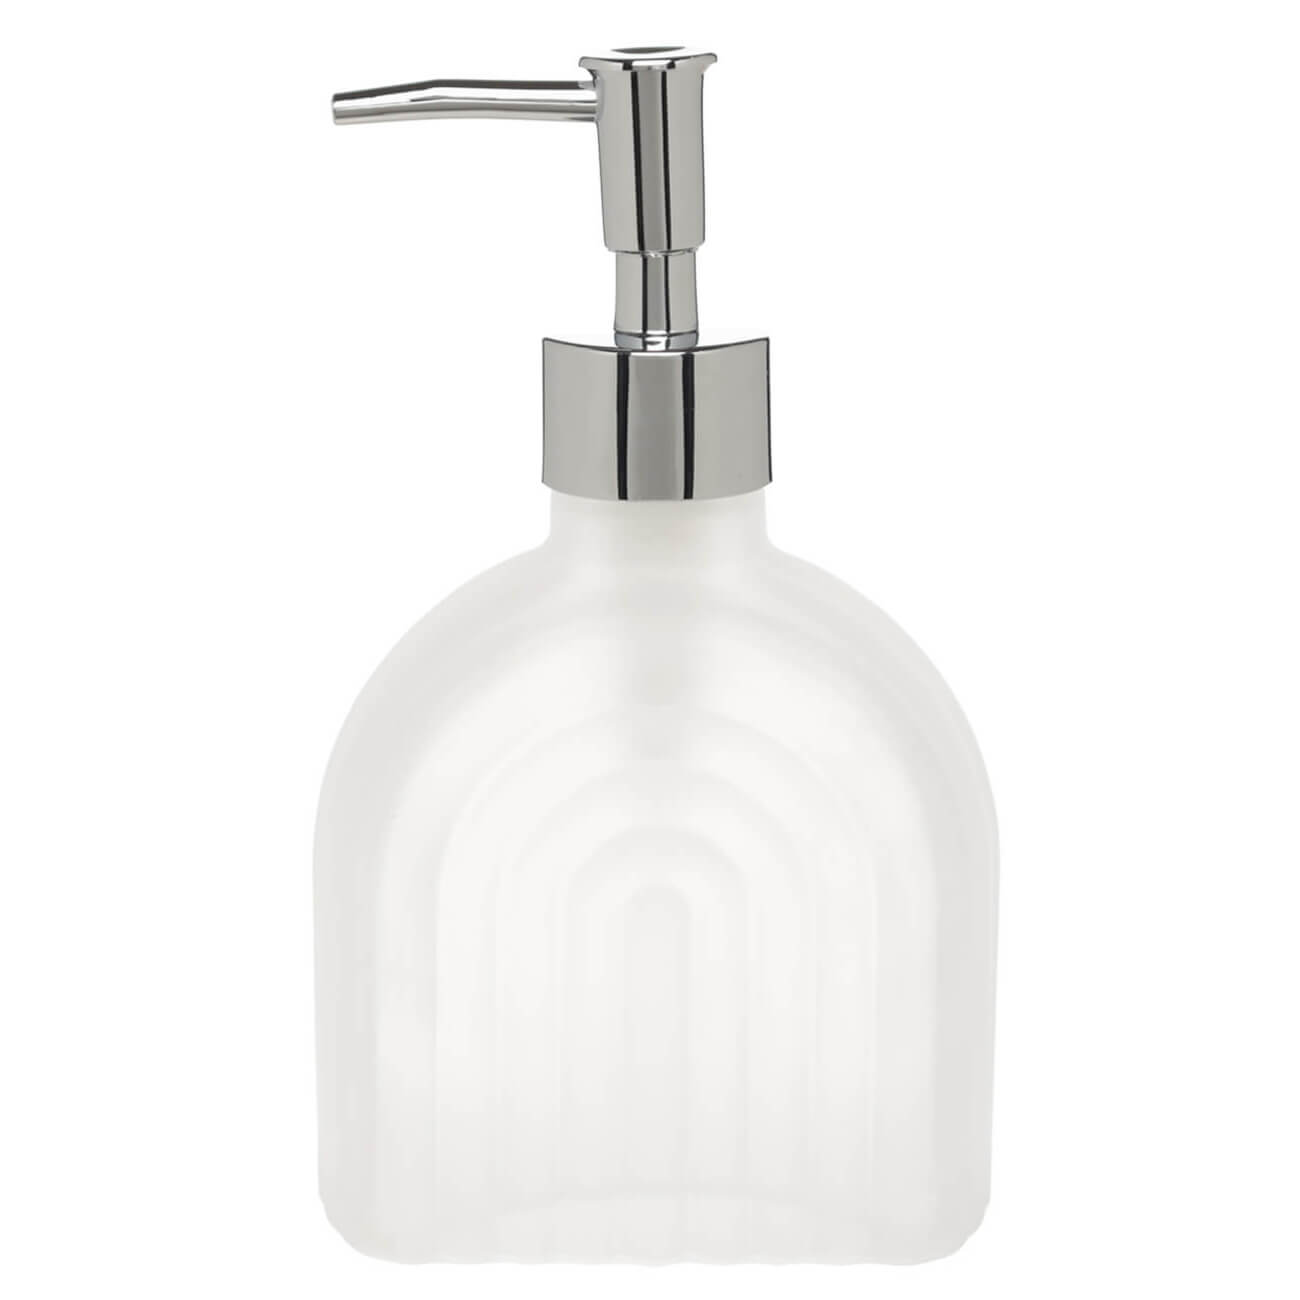 Liquid soap dispenser, 290 ml, Glass / plastic, Arch, Arch изображение № 1